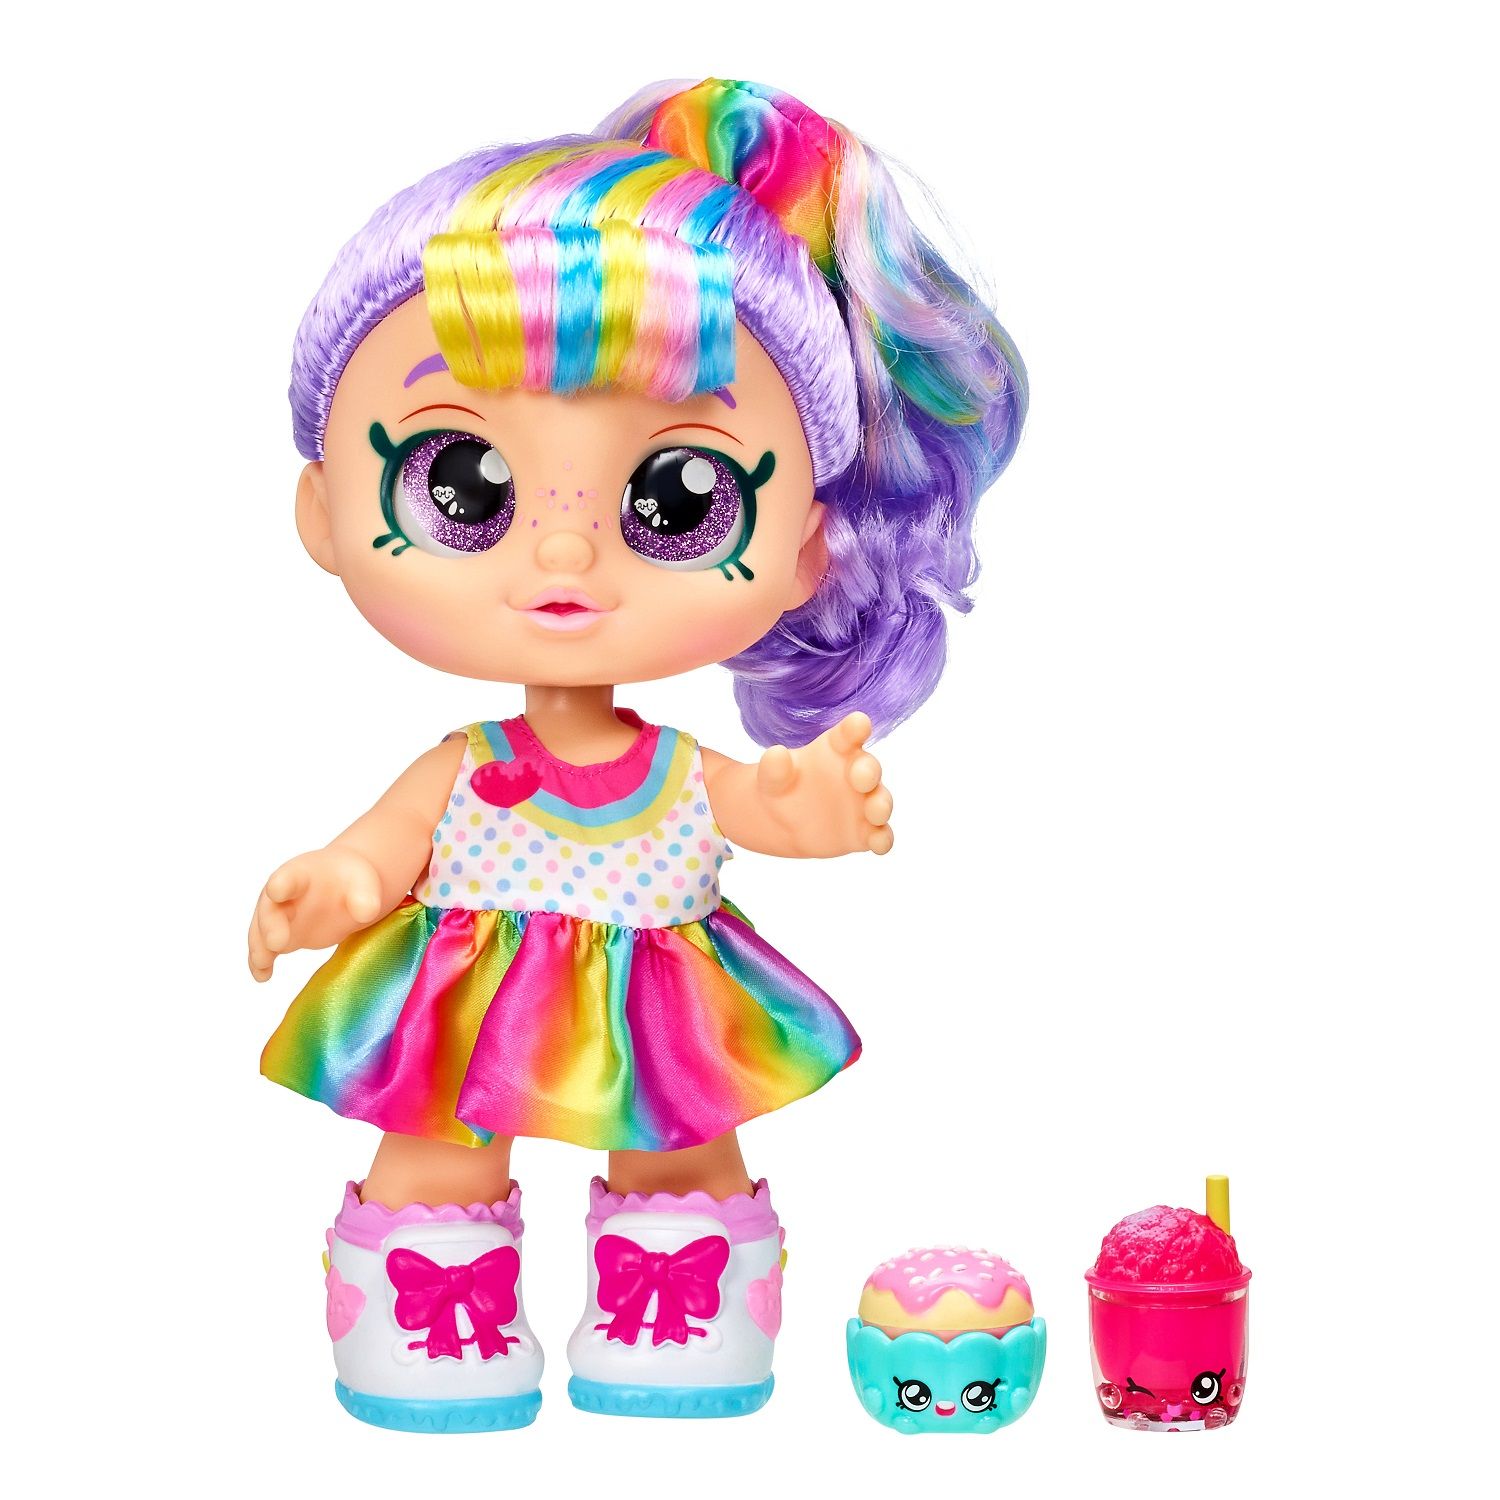 Купить Кукла Кинди Кидс Игровой набор Кукла Рэйнбоу Кейт 25 см с акс. ТМ Kindi Kids 38722,